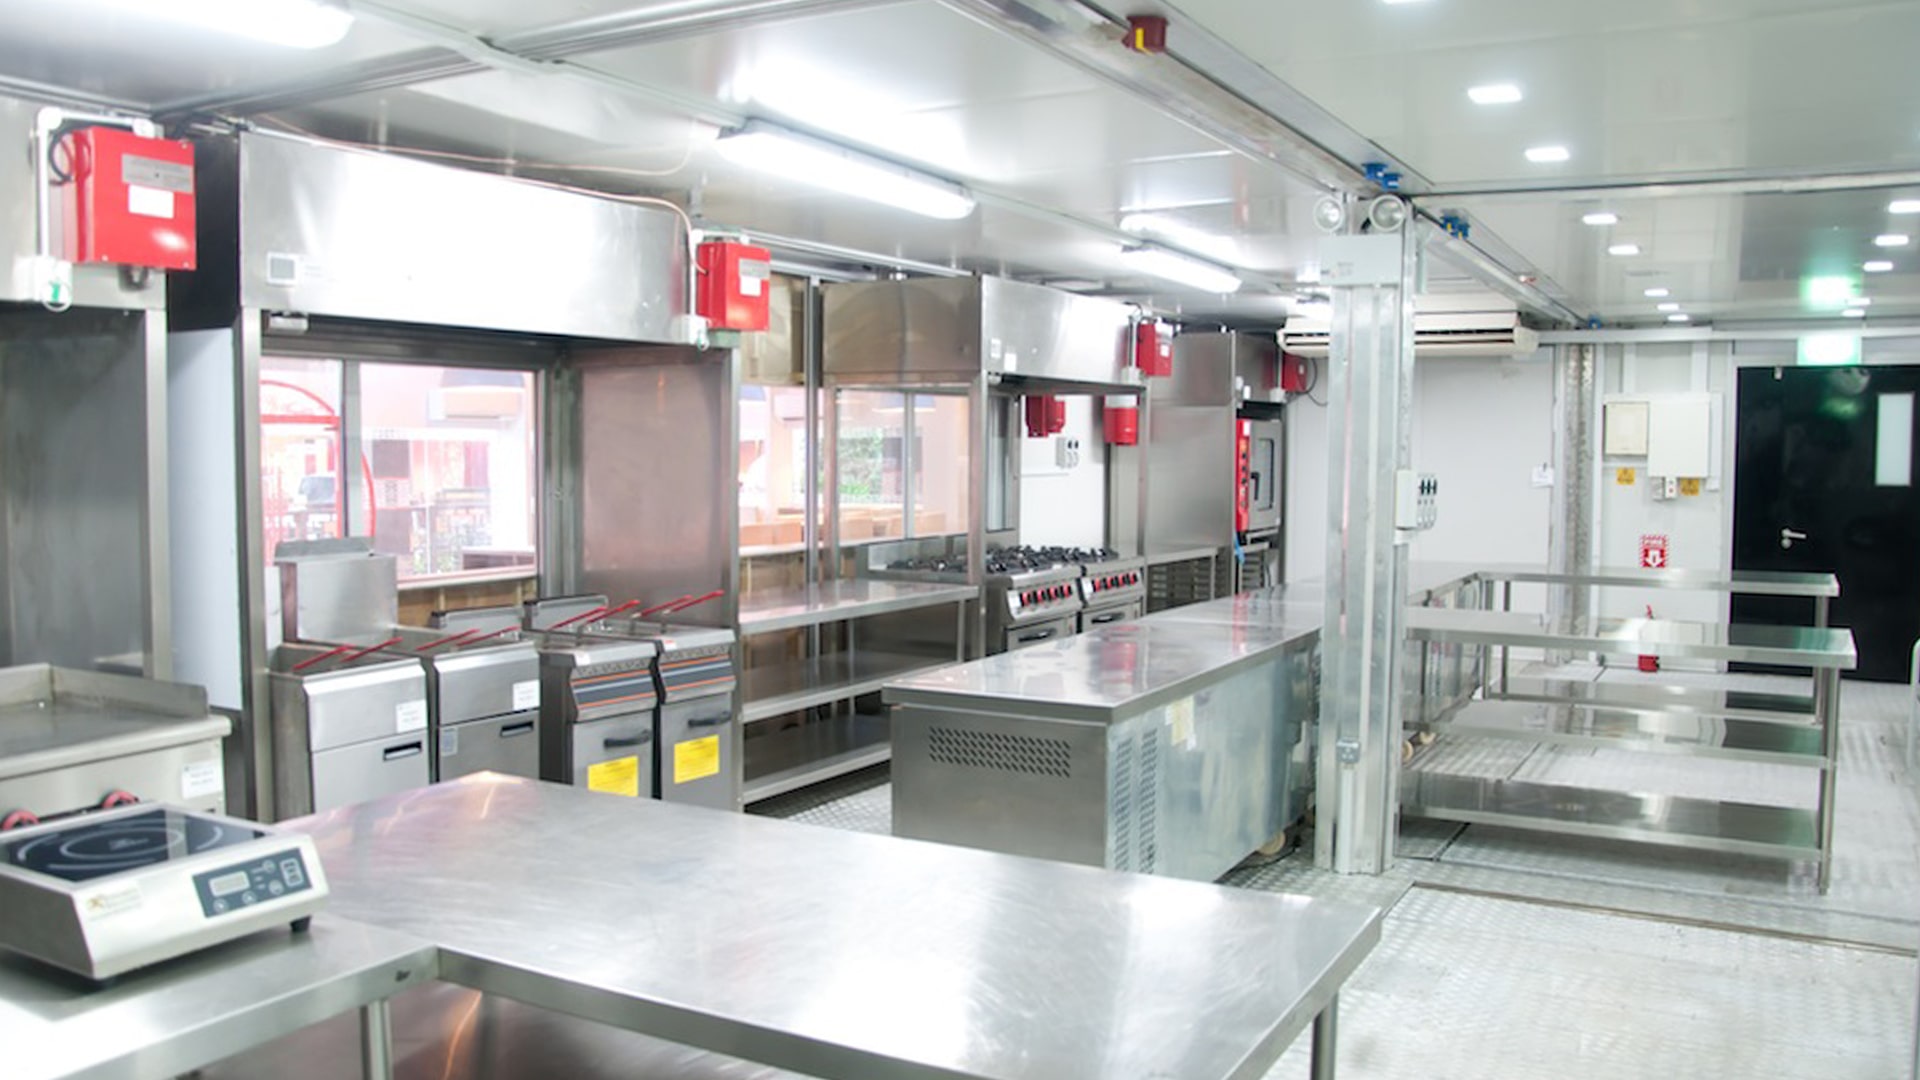 tsc_opt-images_tubelar-system_singapore-grand-prix-base-kitchens-1920x1080-03-min